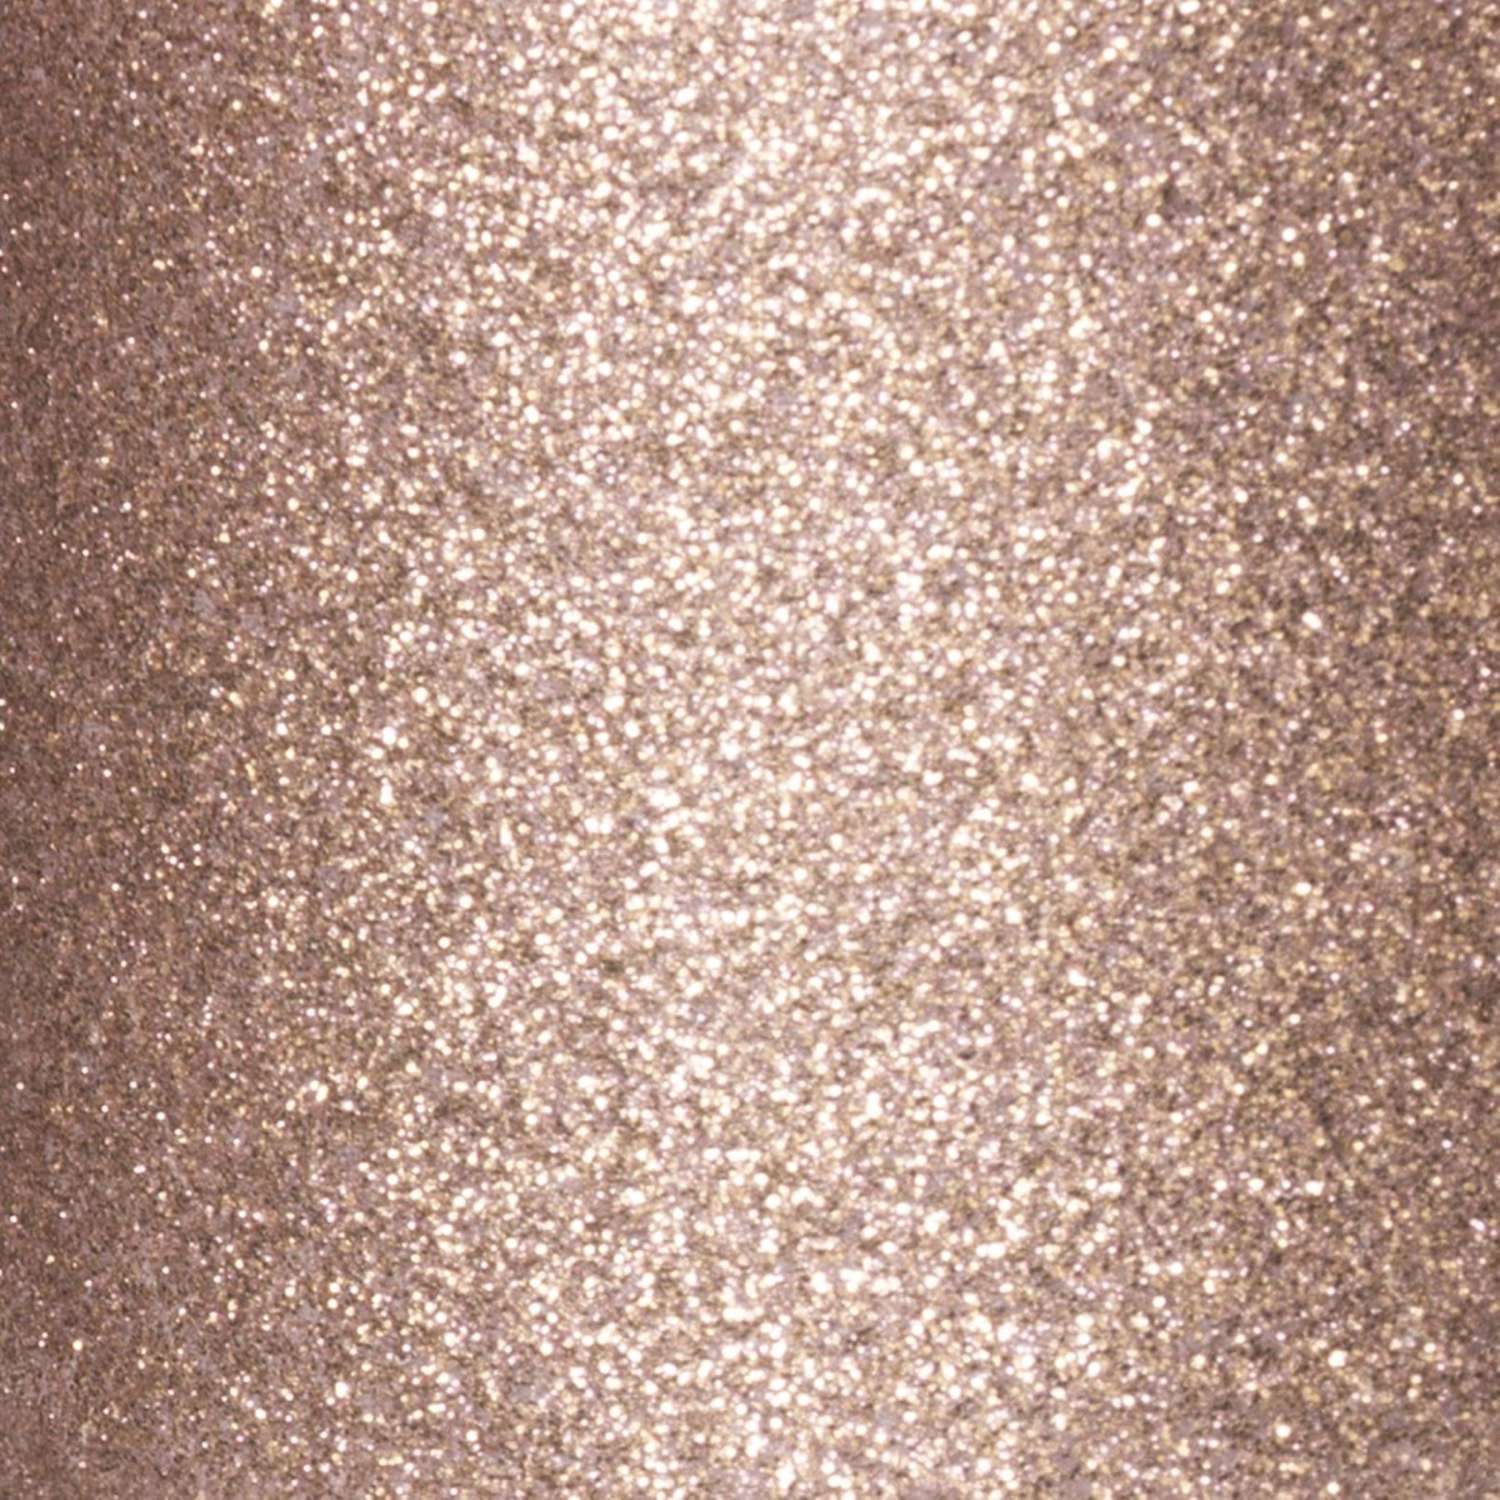 Rust-Oleum Imagine Craft & Hobby 10.25 Oz. Intense Silver Glitter